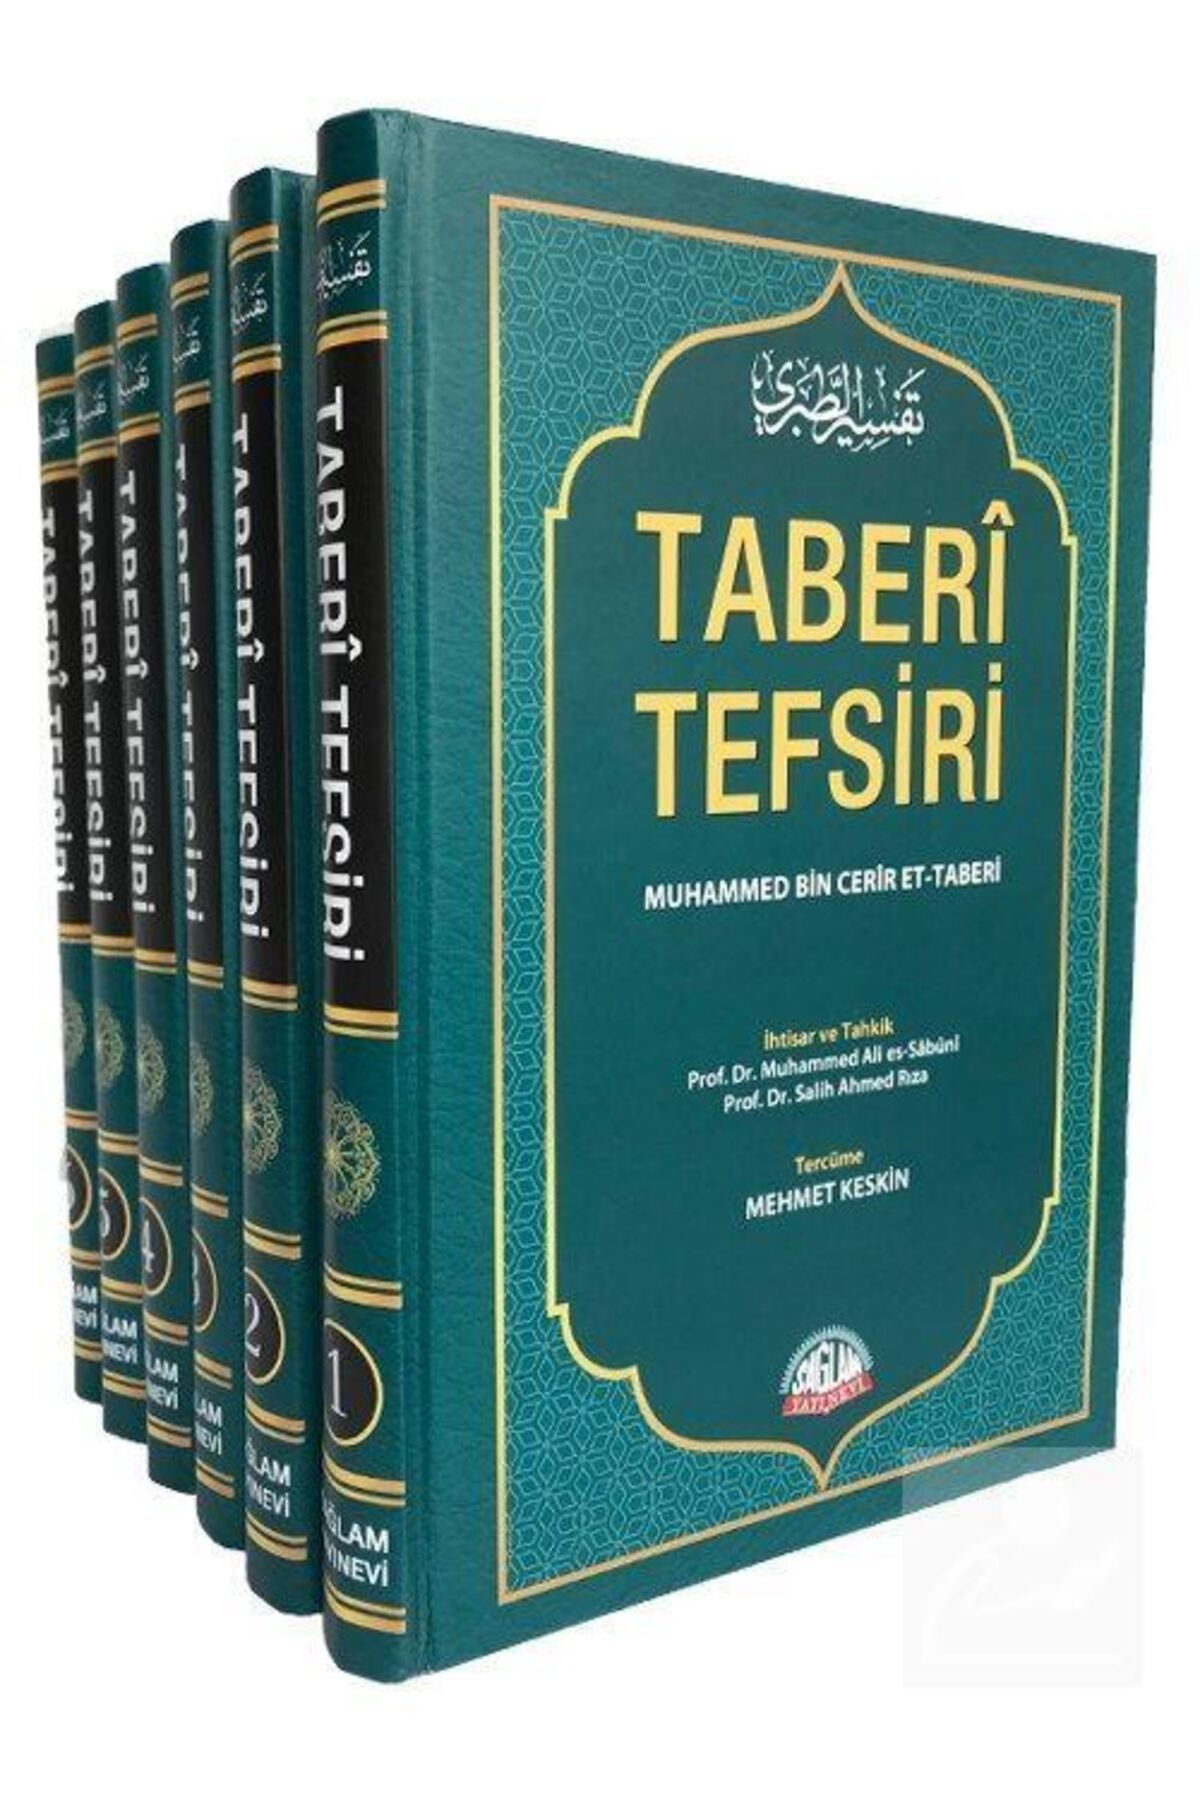 Sağlam Yayınevi Taberi Tefsiri Kur'an-ı Kerim Tefsiri Tercümesi (6 CİLT TAKIM)